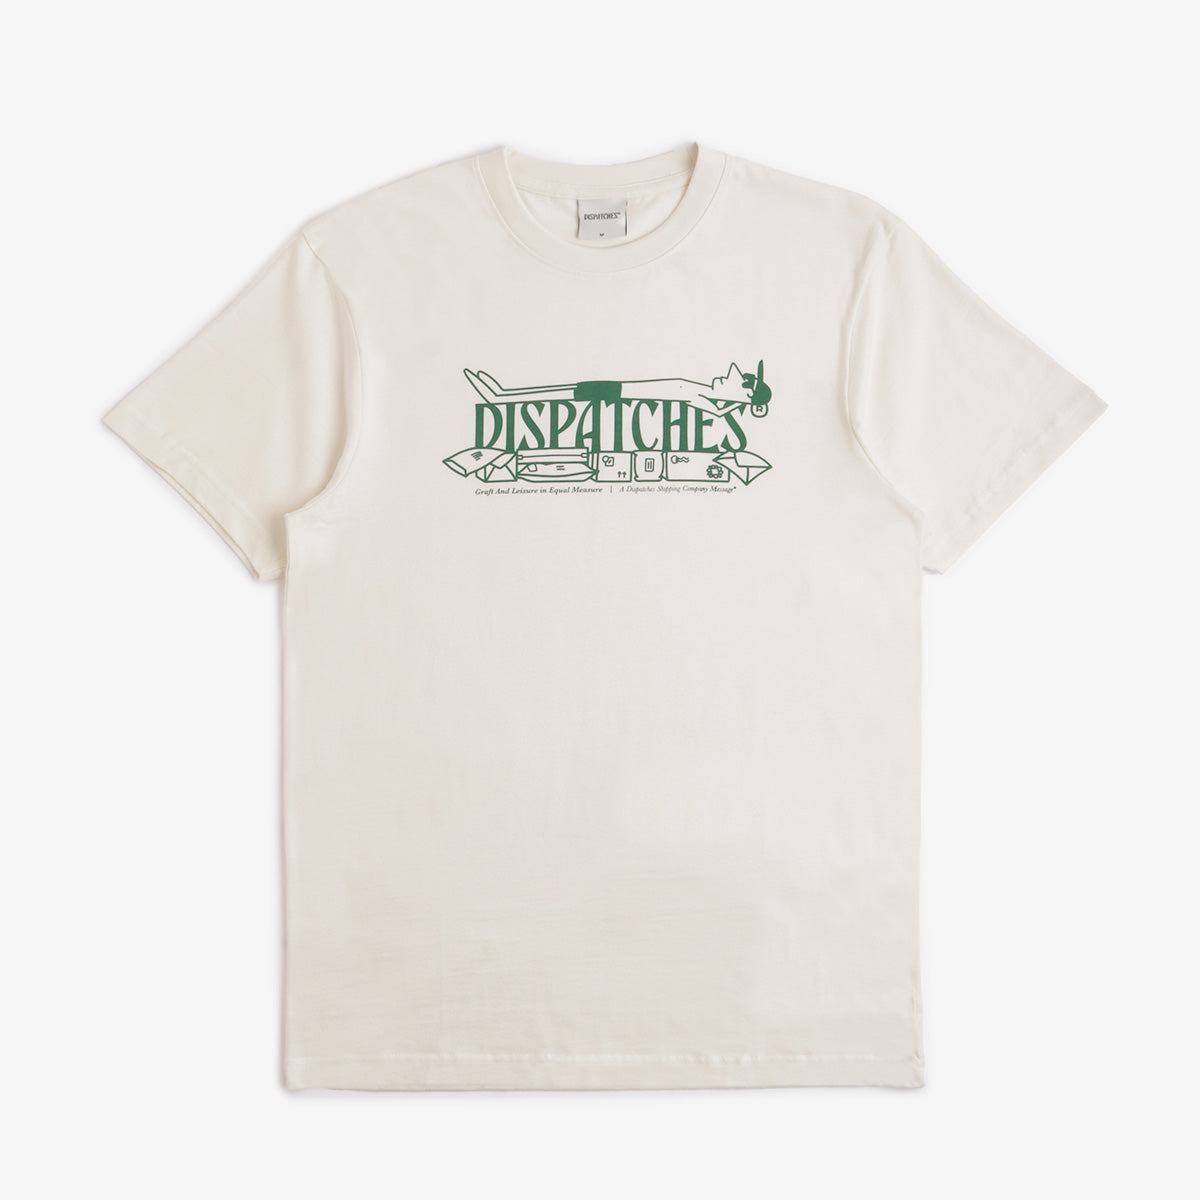 Dispatches Graft T-Shirt